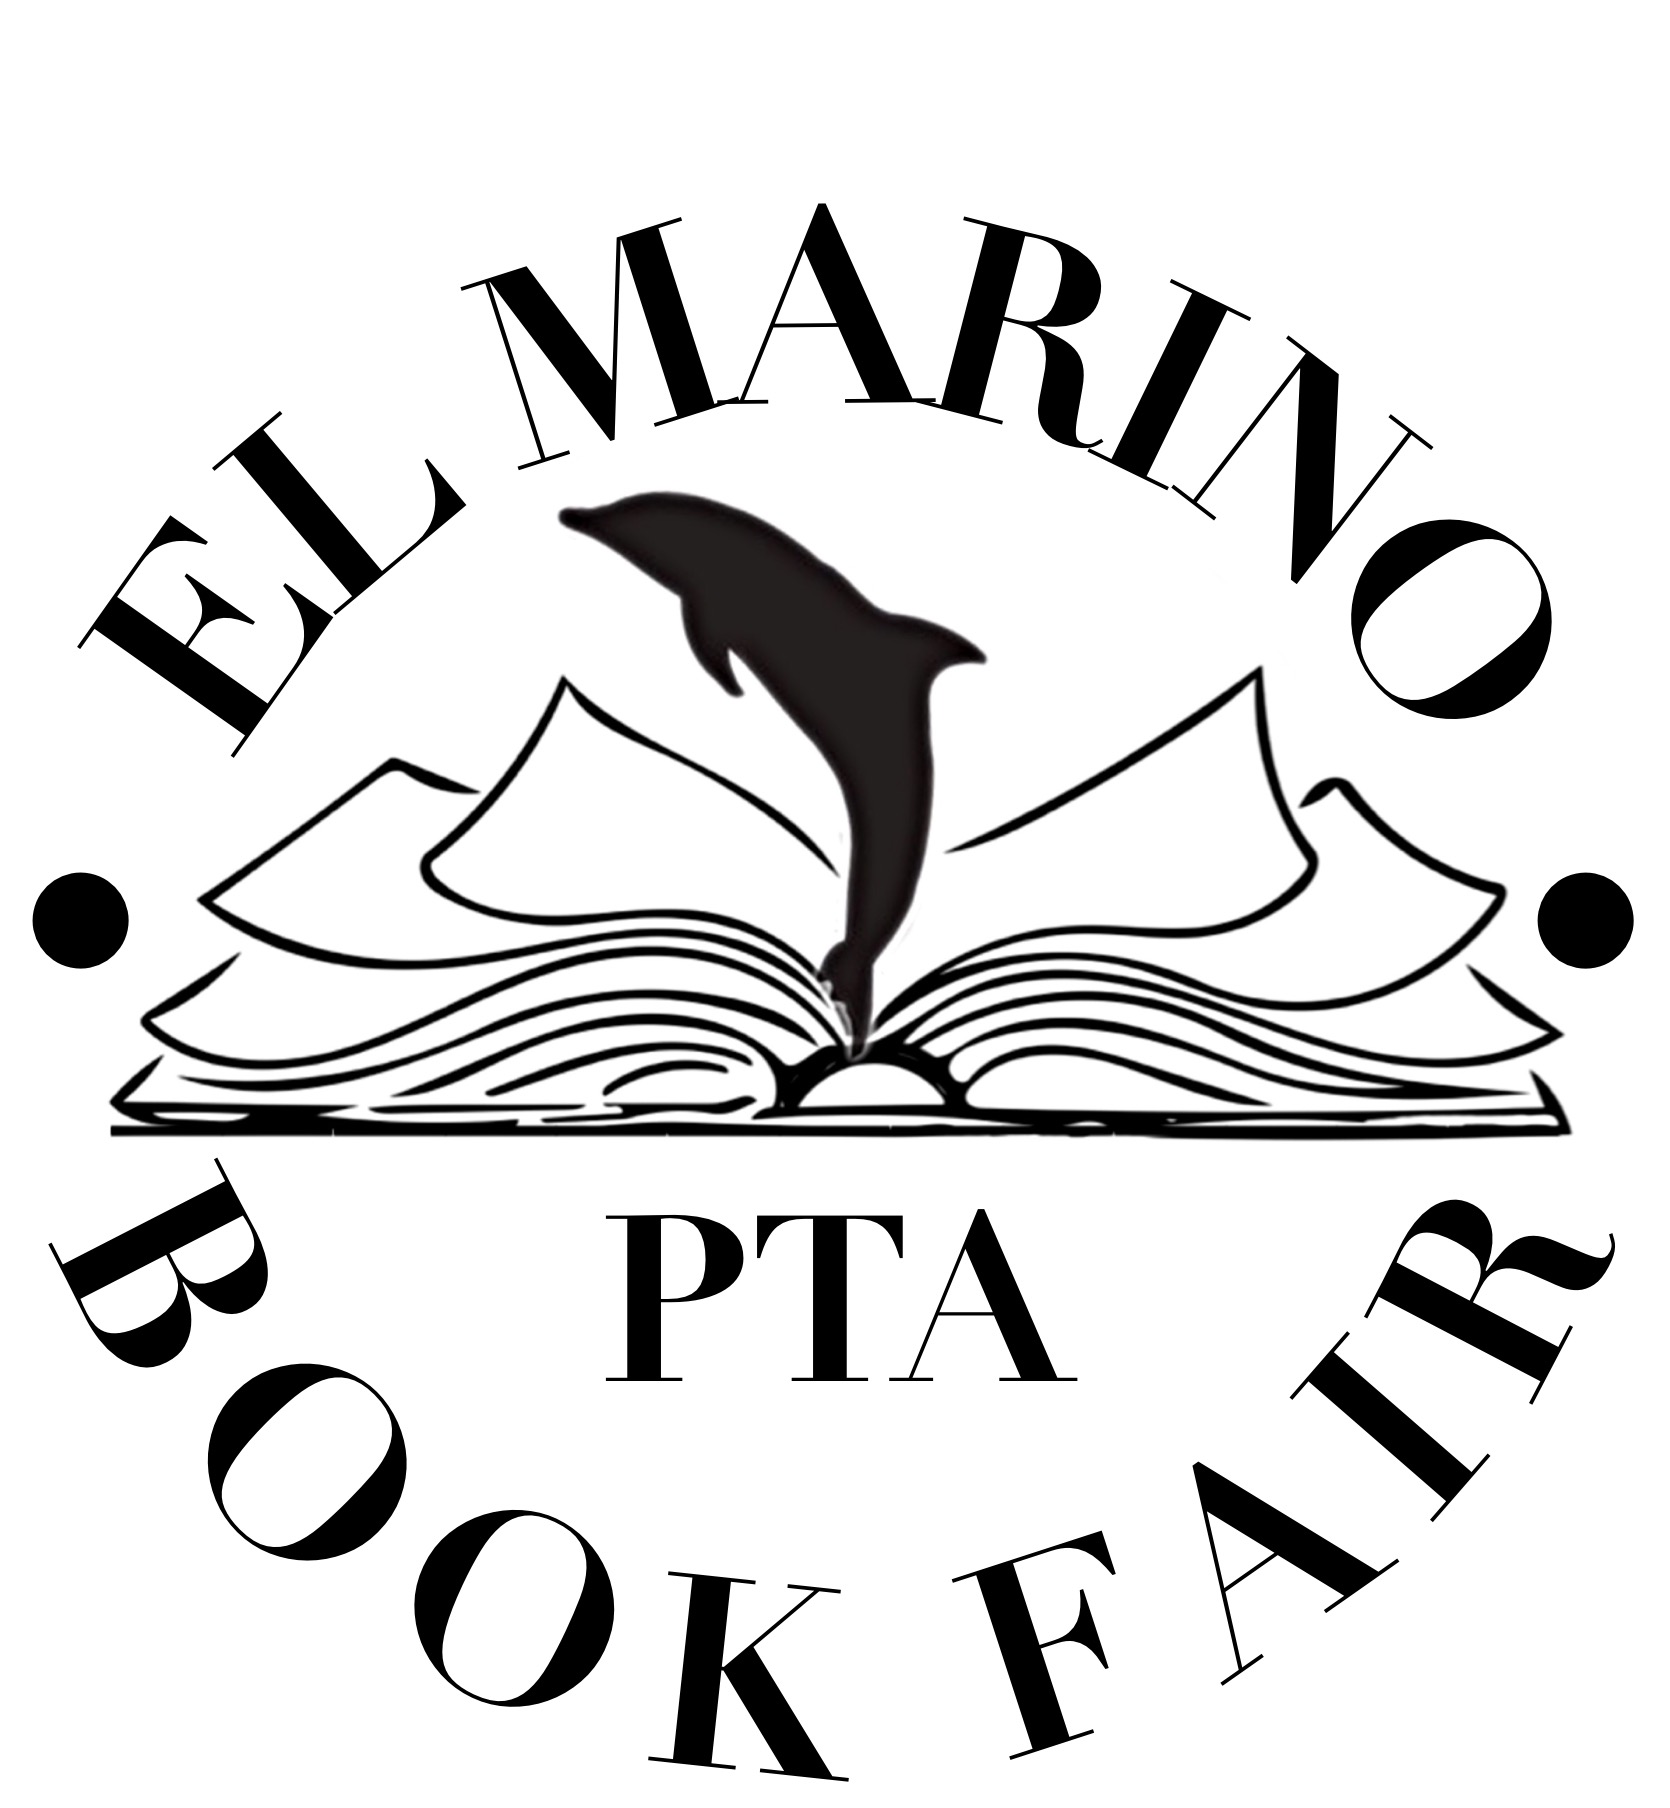 Wel e to the El Marino Book Fair page